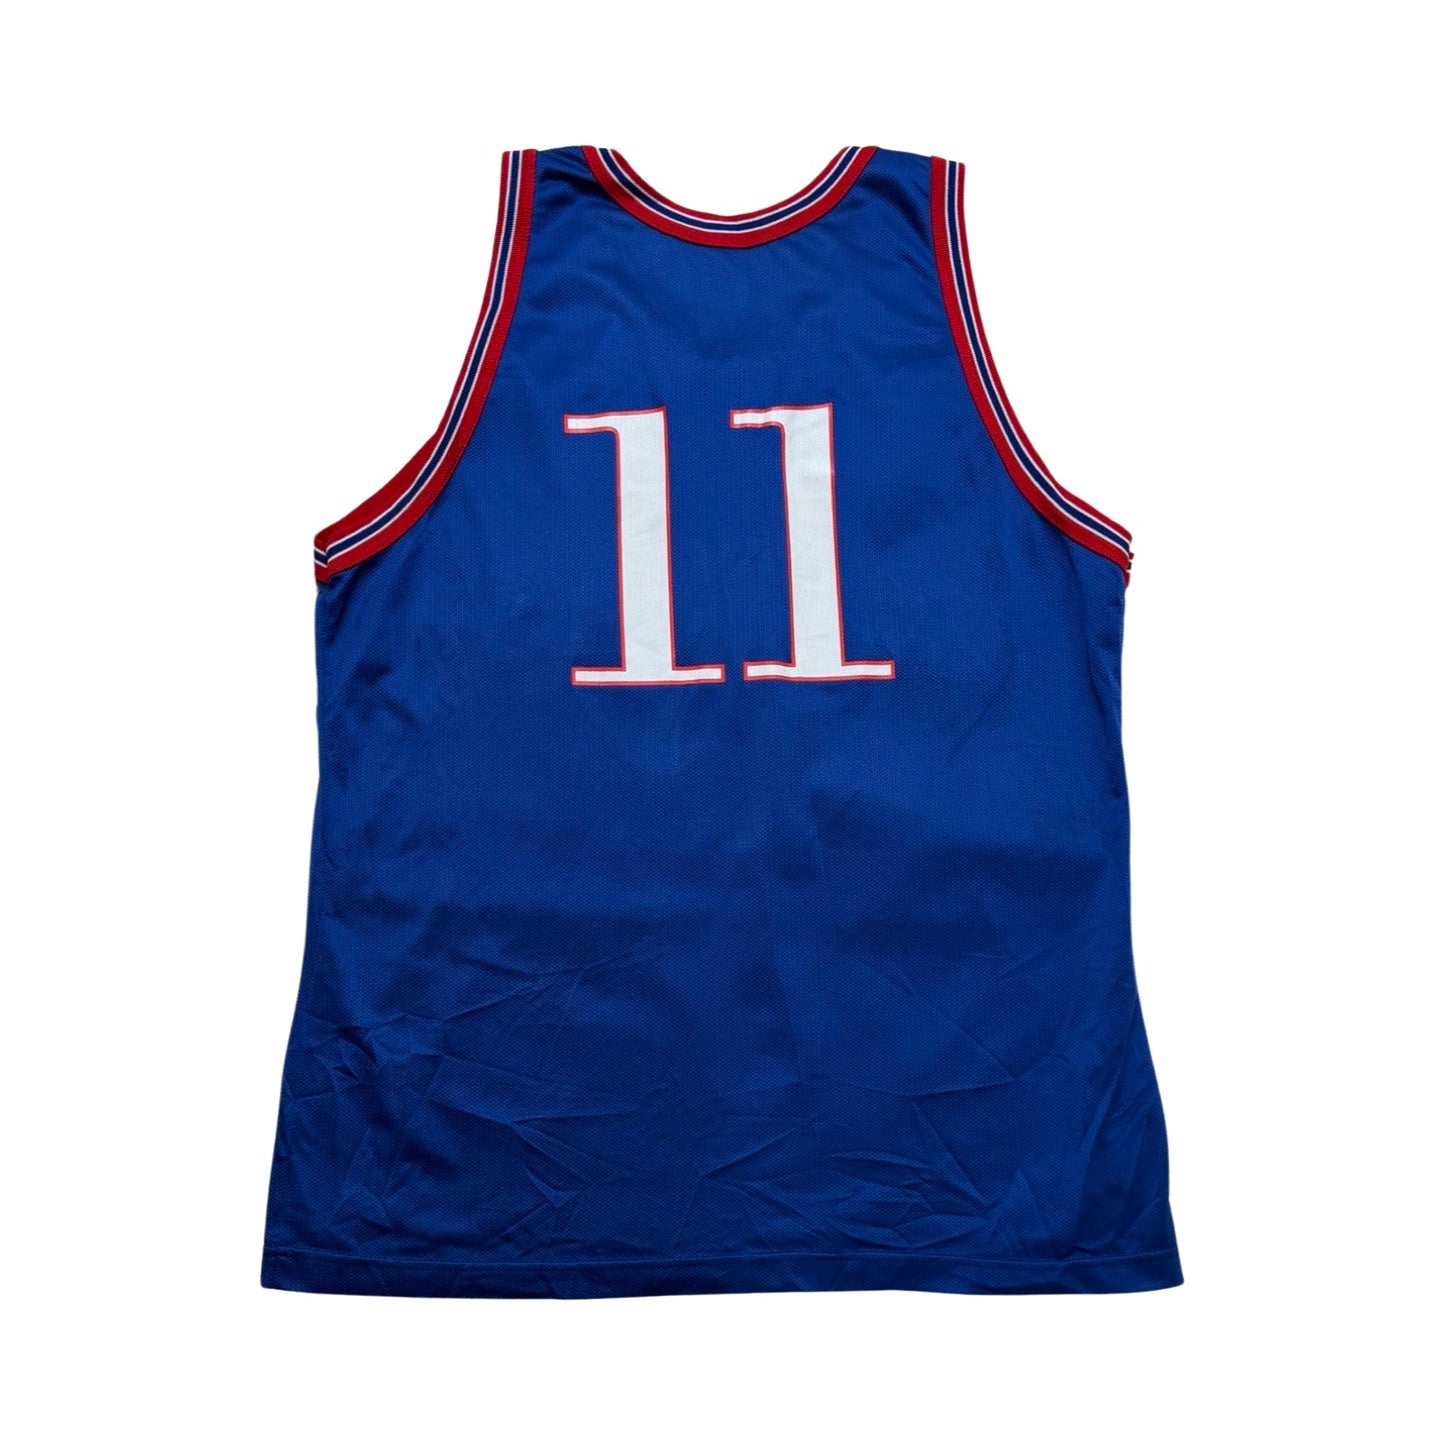 Vintage Kansas Jayhawks Champion Basketball Jersey Size 48/L NCAA #11 University